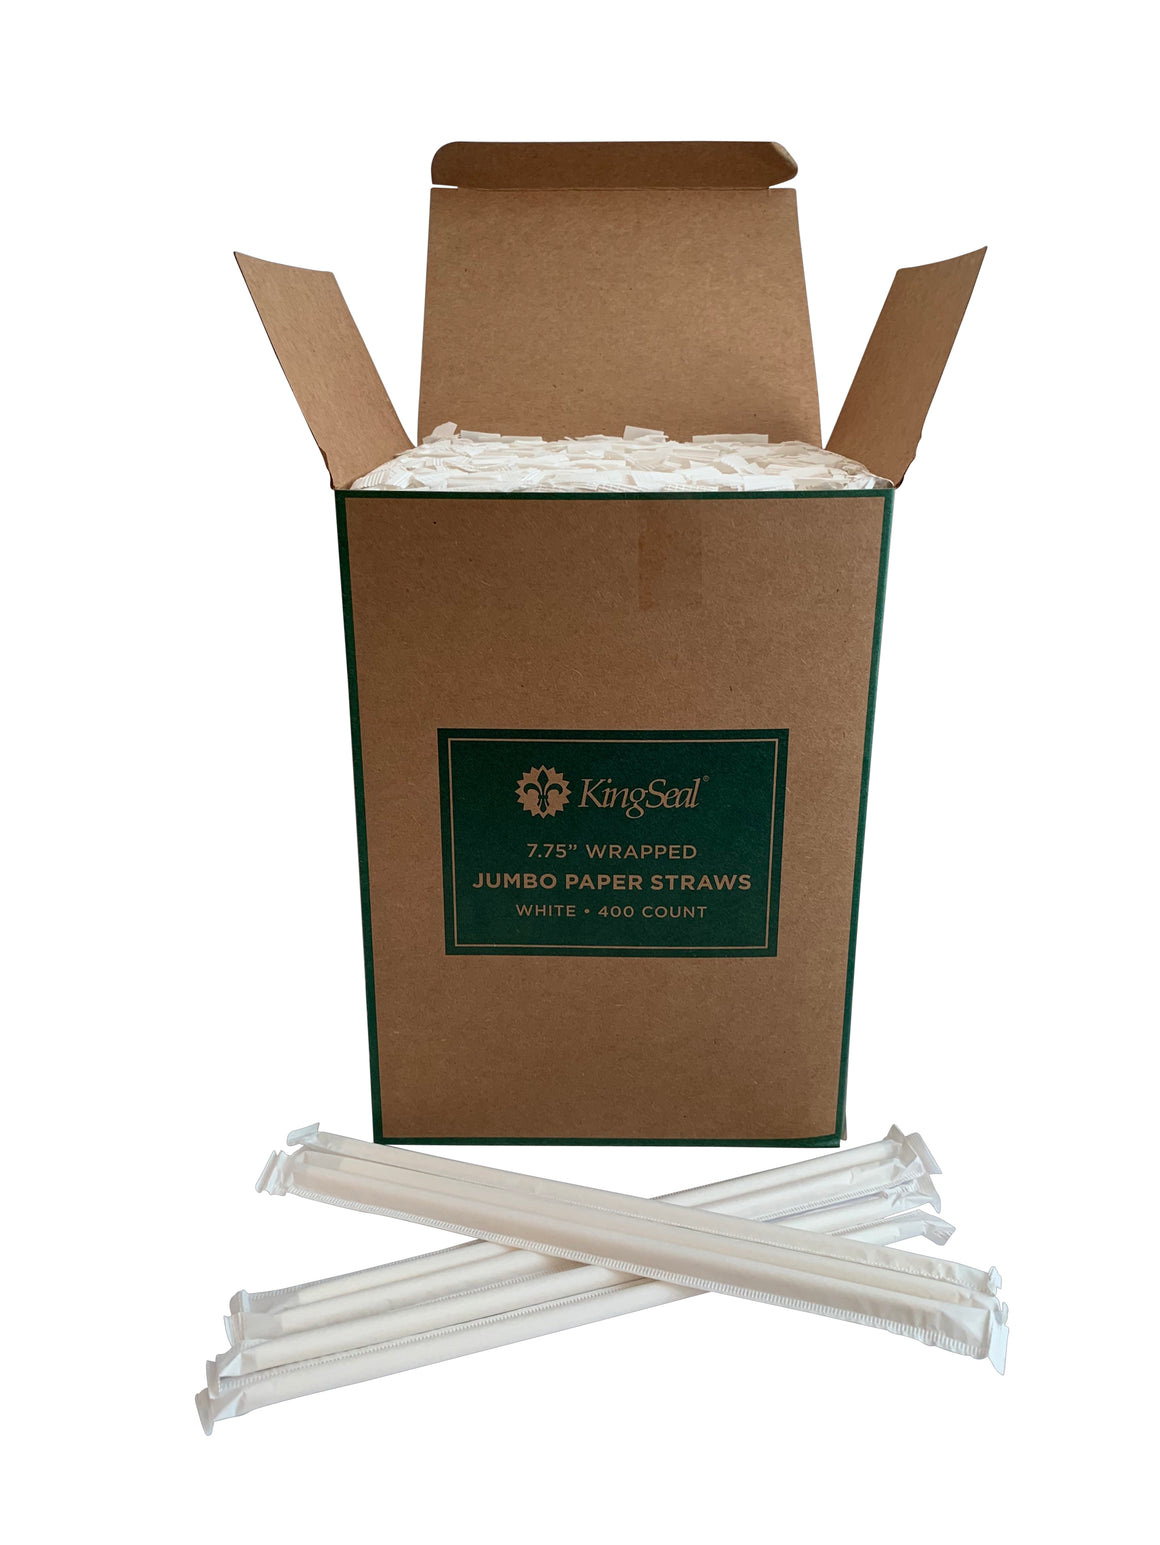 Kingseal FSC® C041262 Certified "Jumbo" Paper Drinking Straws, Paper Wrapped, White, 7.75 Inch, Bulk Pack